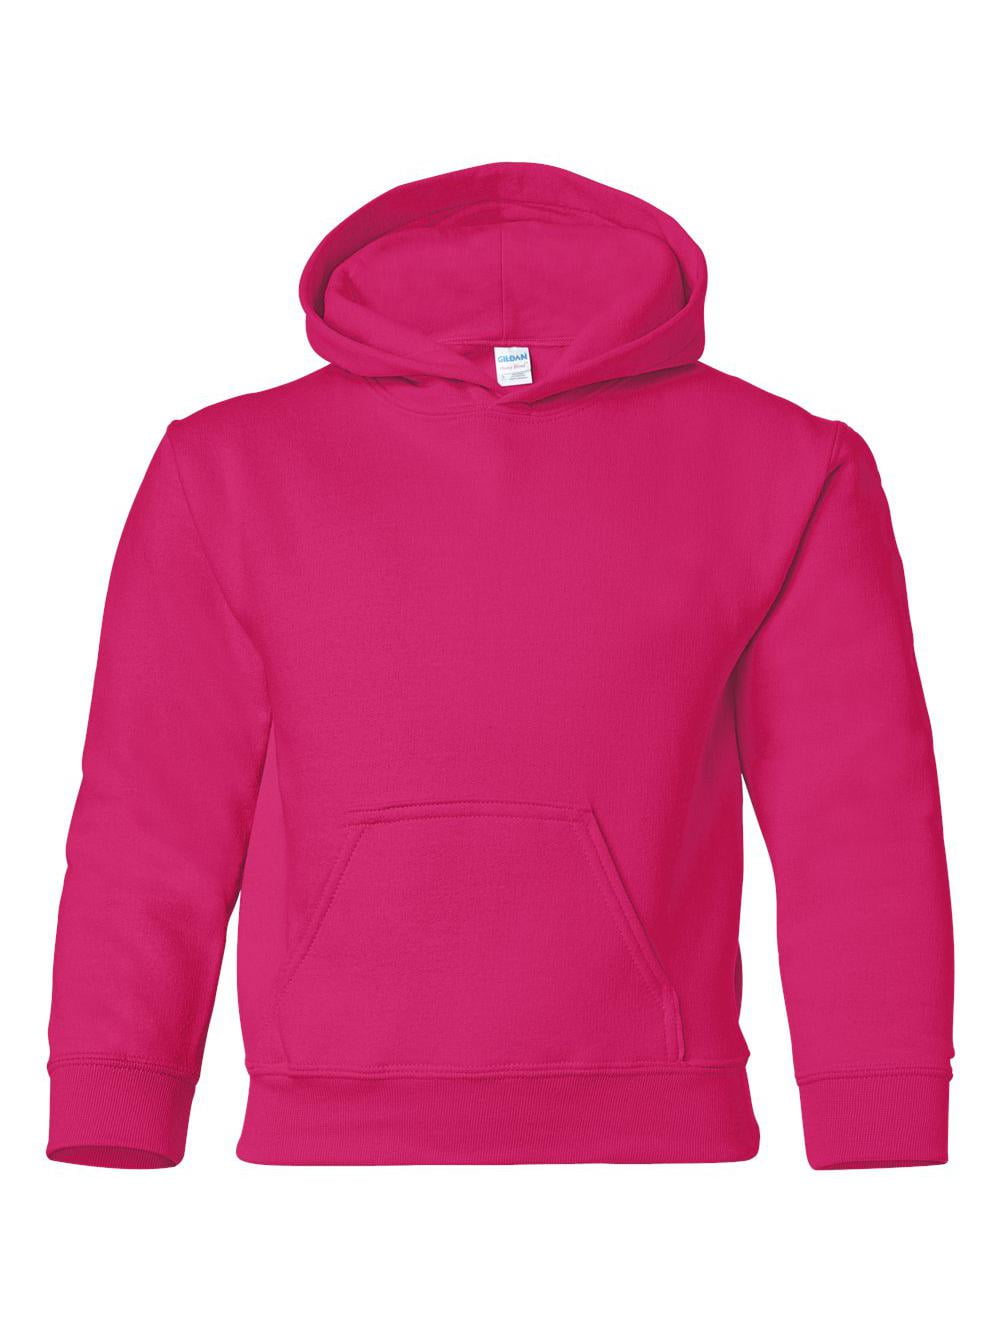 Gildan - Heavy Blend Youth Hooded Sweatshirt - 18500B - Light Pink